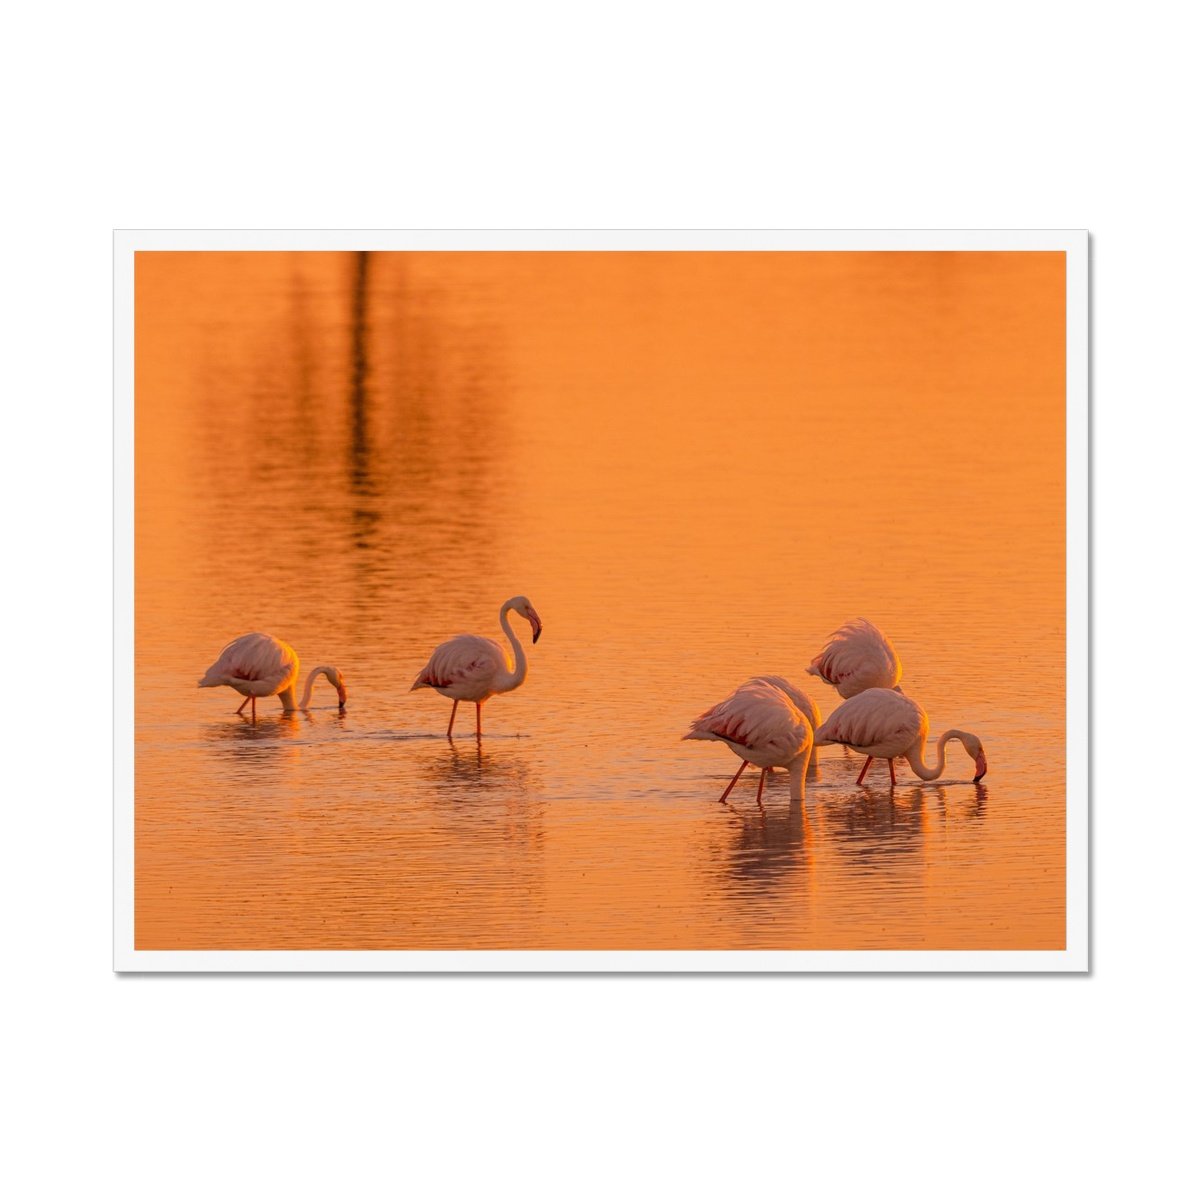 Flamingos - Sean Lee-Davies Sean Lee Davies